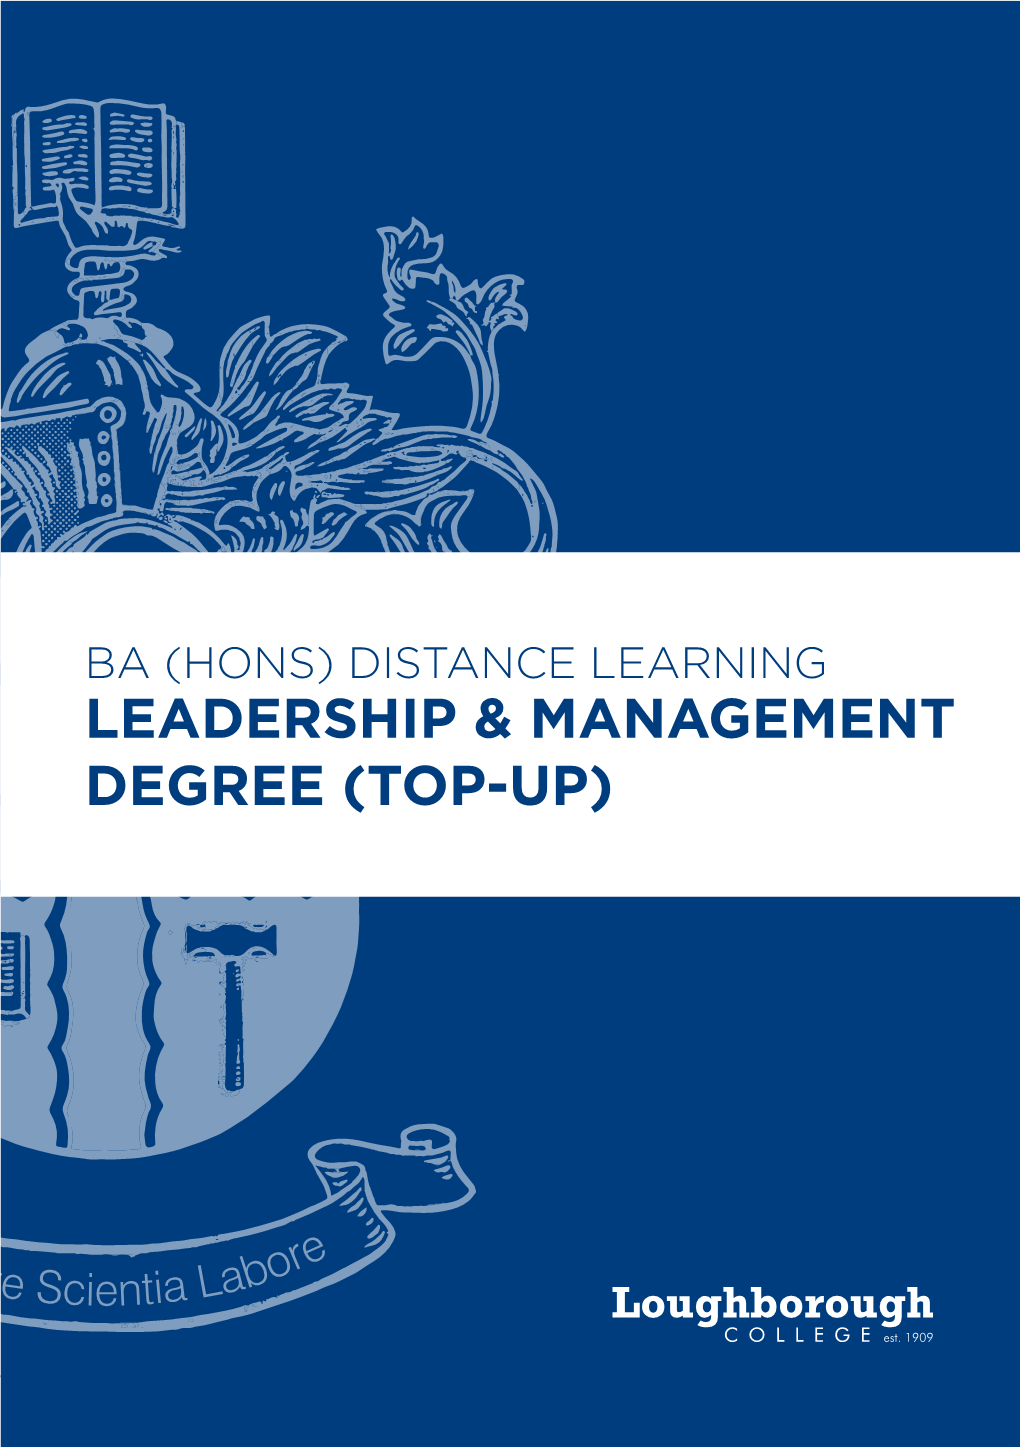 Leadership & Management Degree (Top-Up)